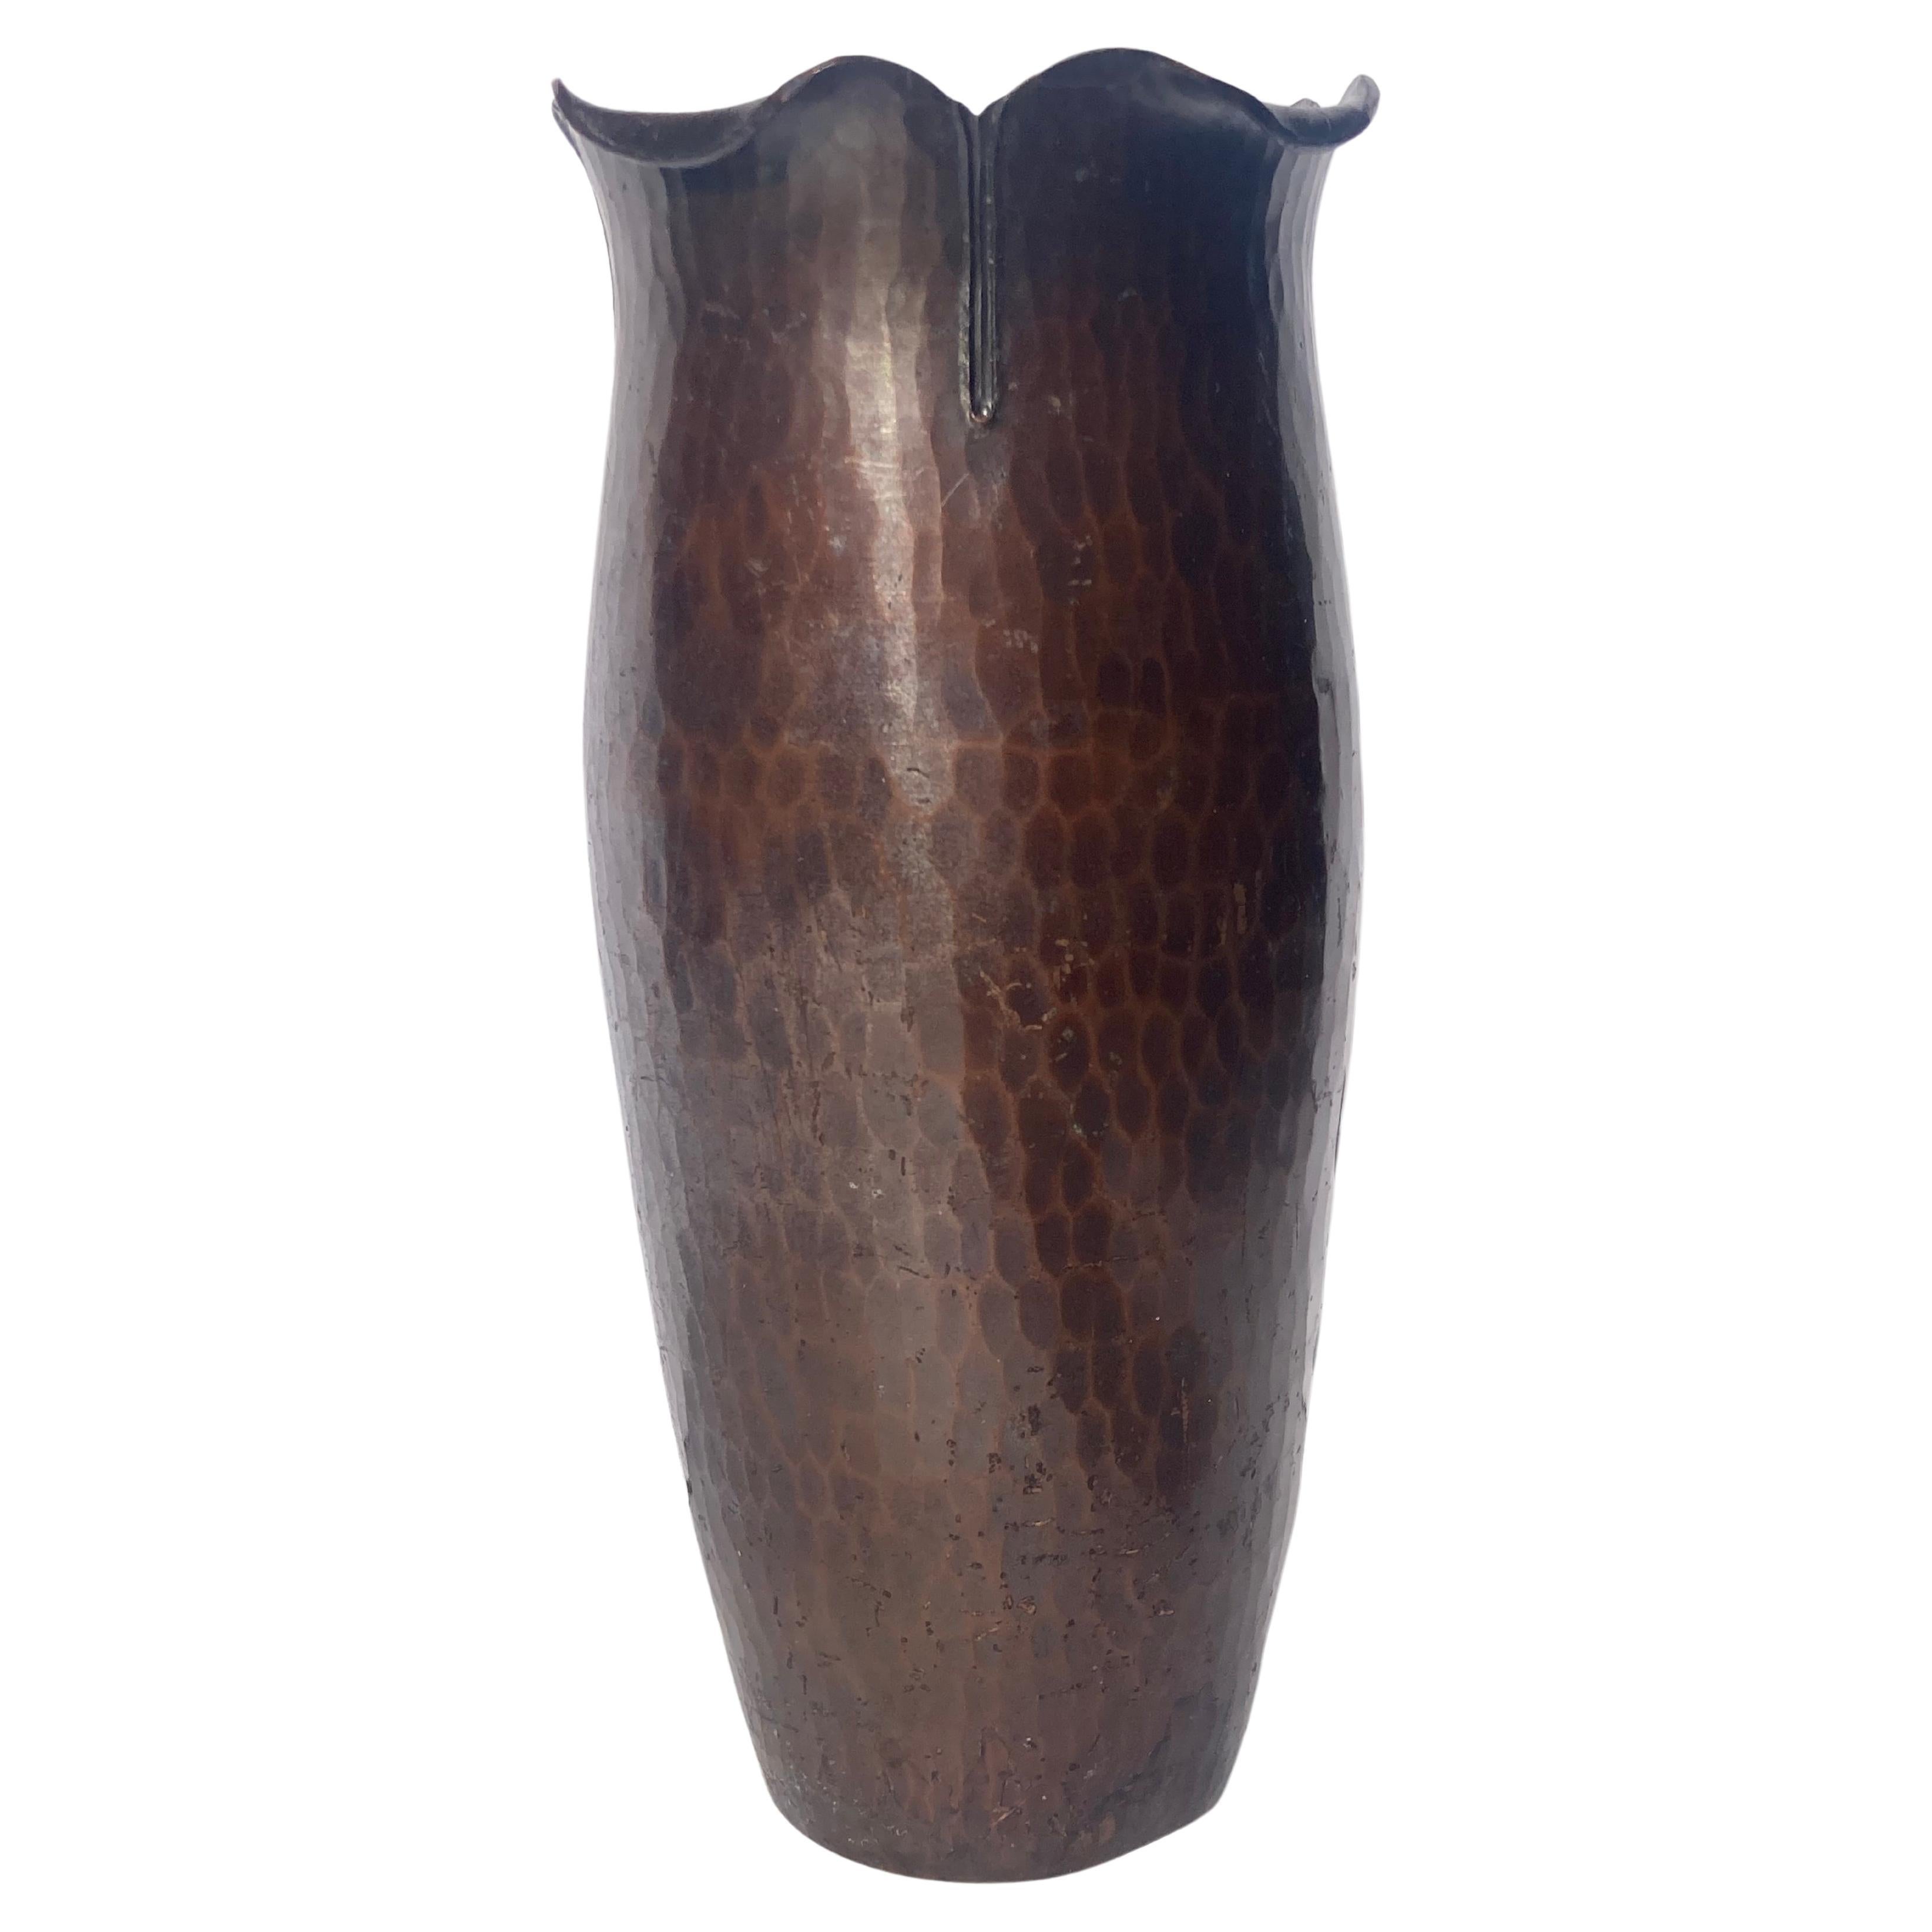 Vase en cuivre Hammered Copper Craft, mouvement Arts and Craft, patine Brown